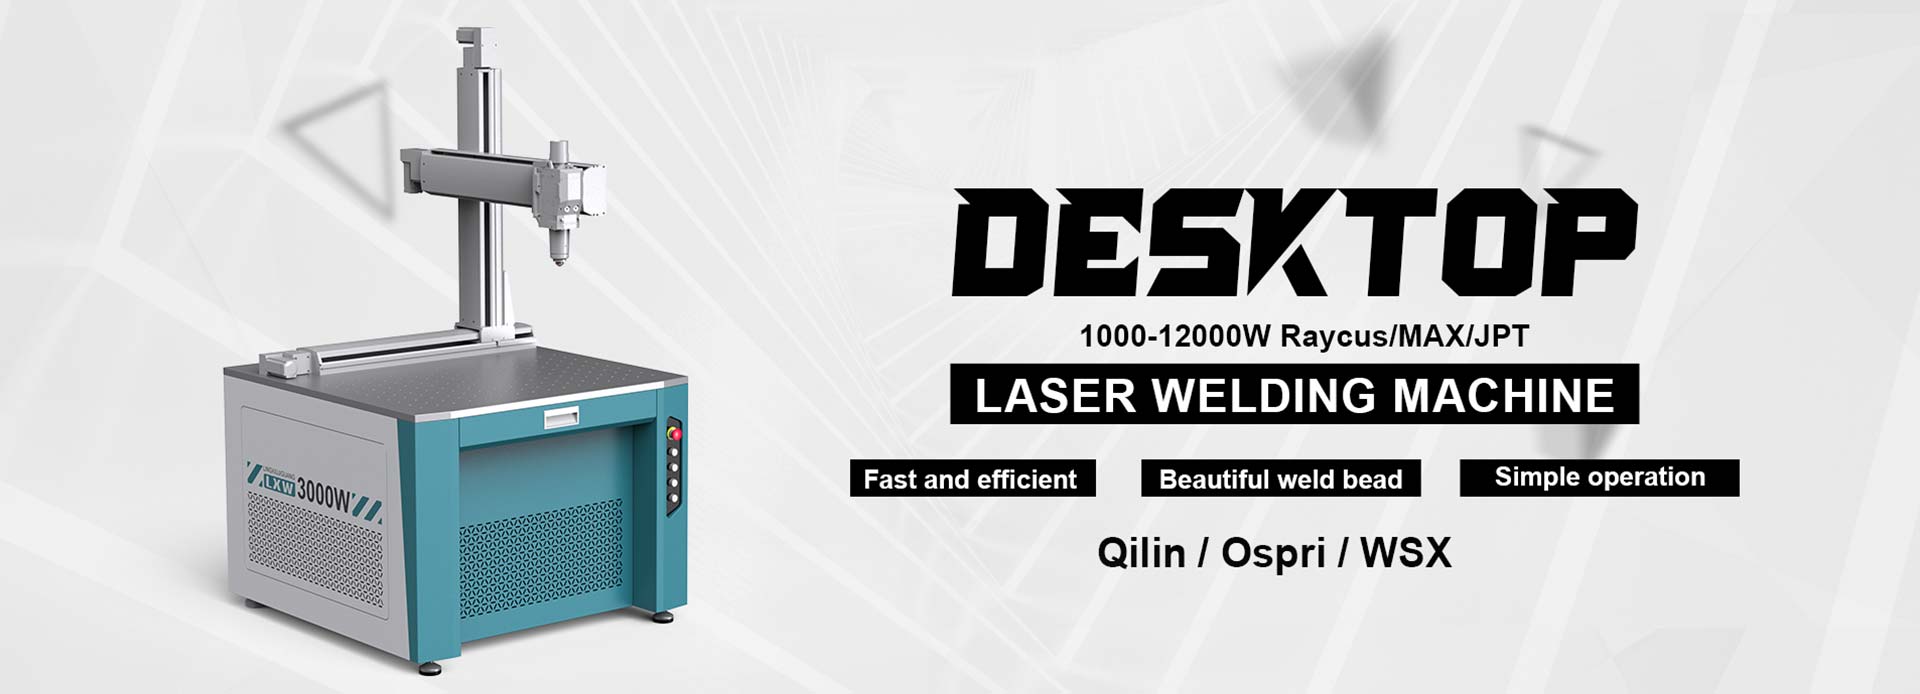 LXW-1000-2000W Tabletop Laser Metal Welding Machine igwe anaghị agba nchara Carbon Steel Iron